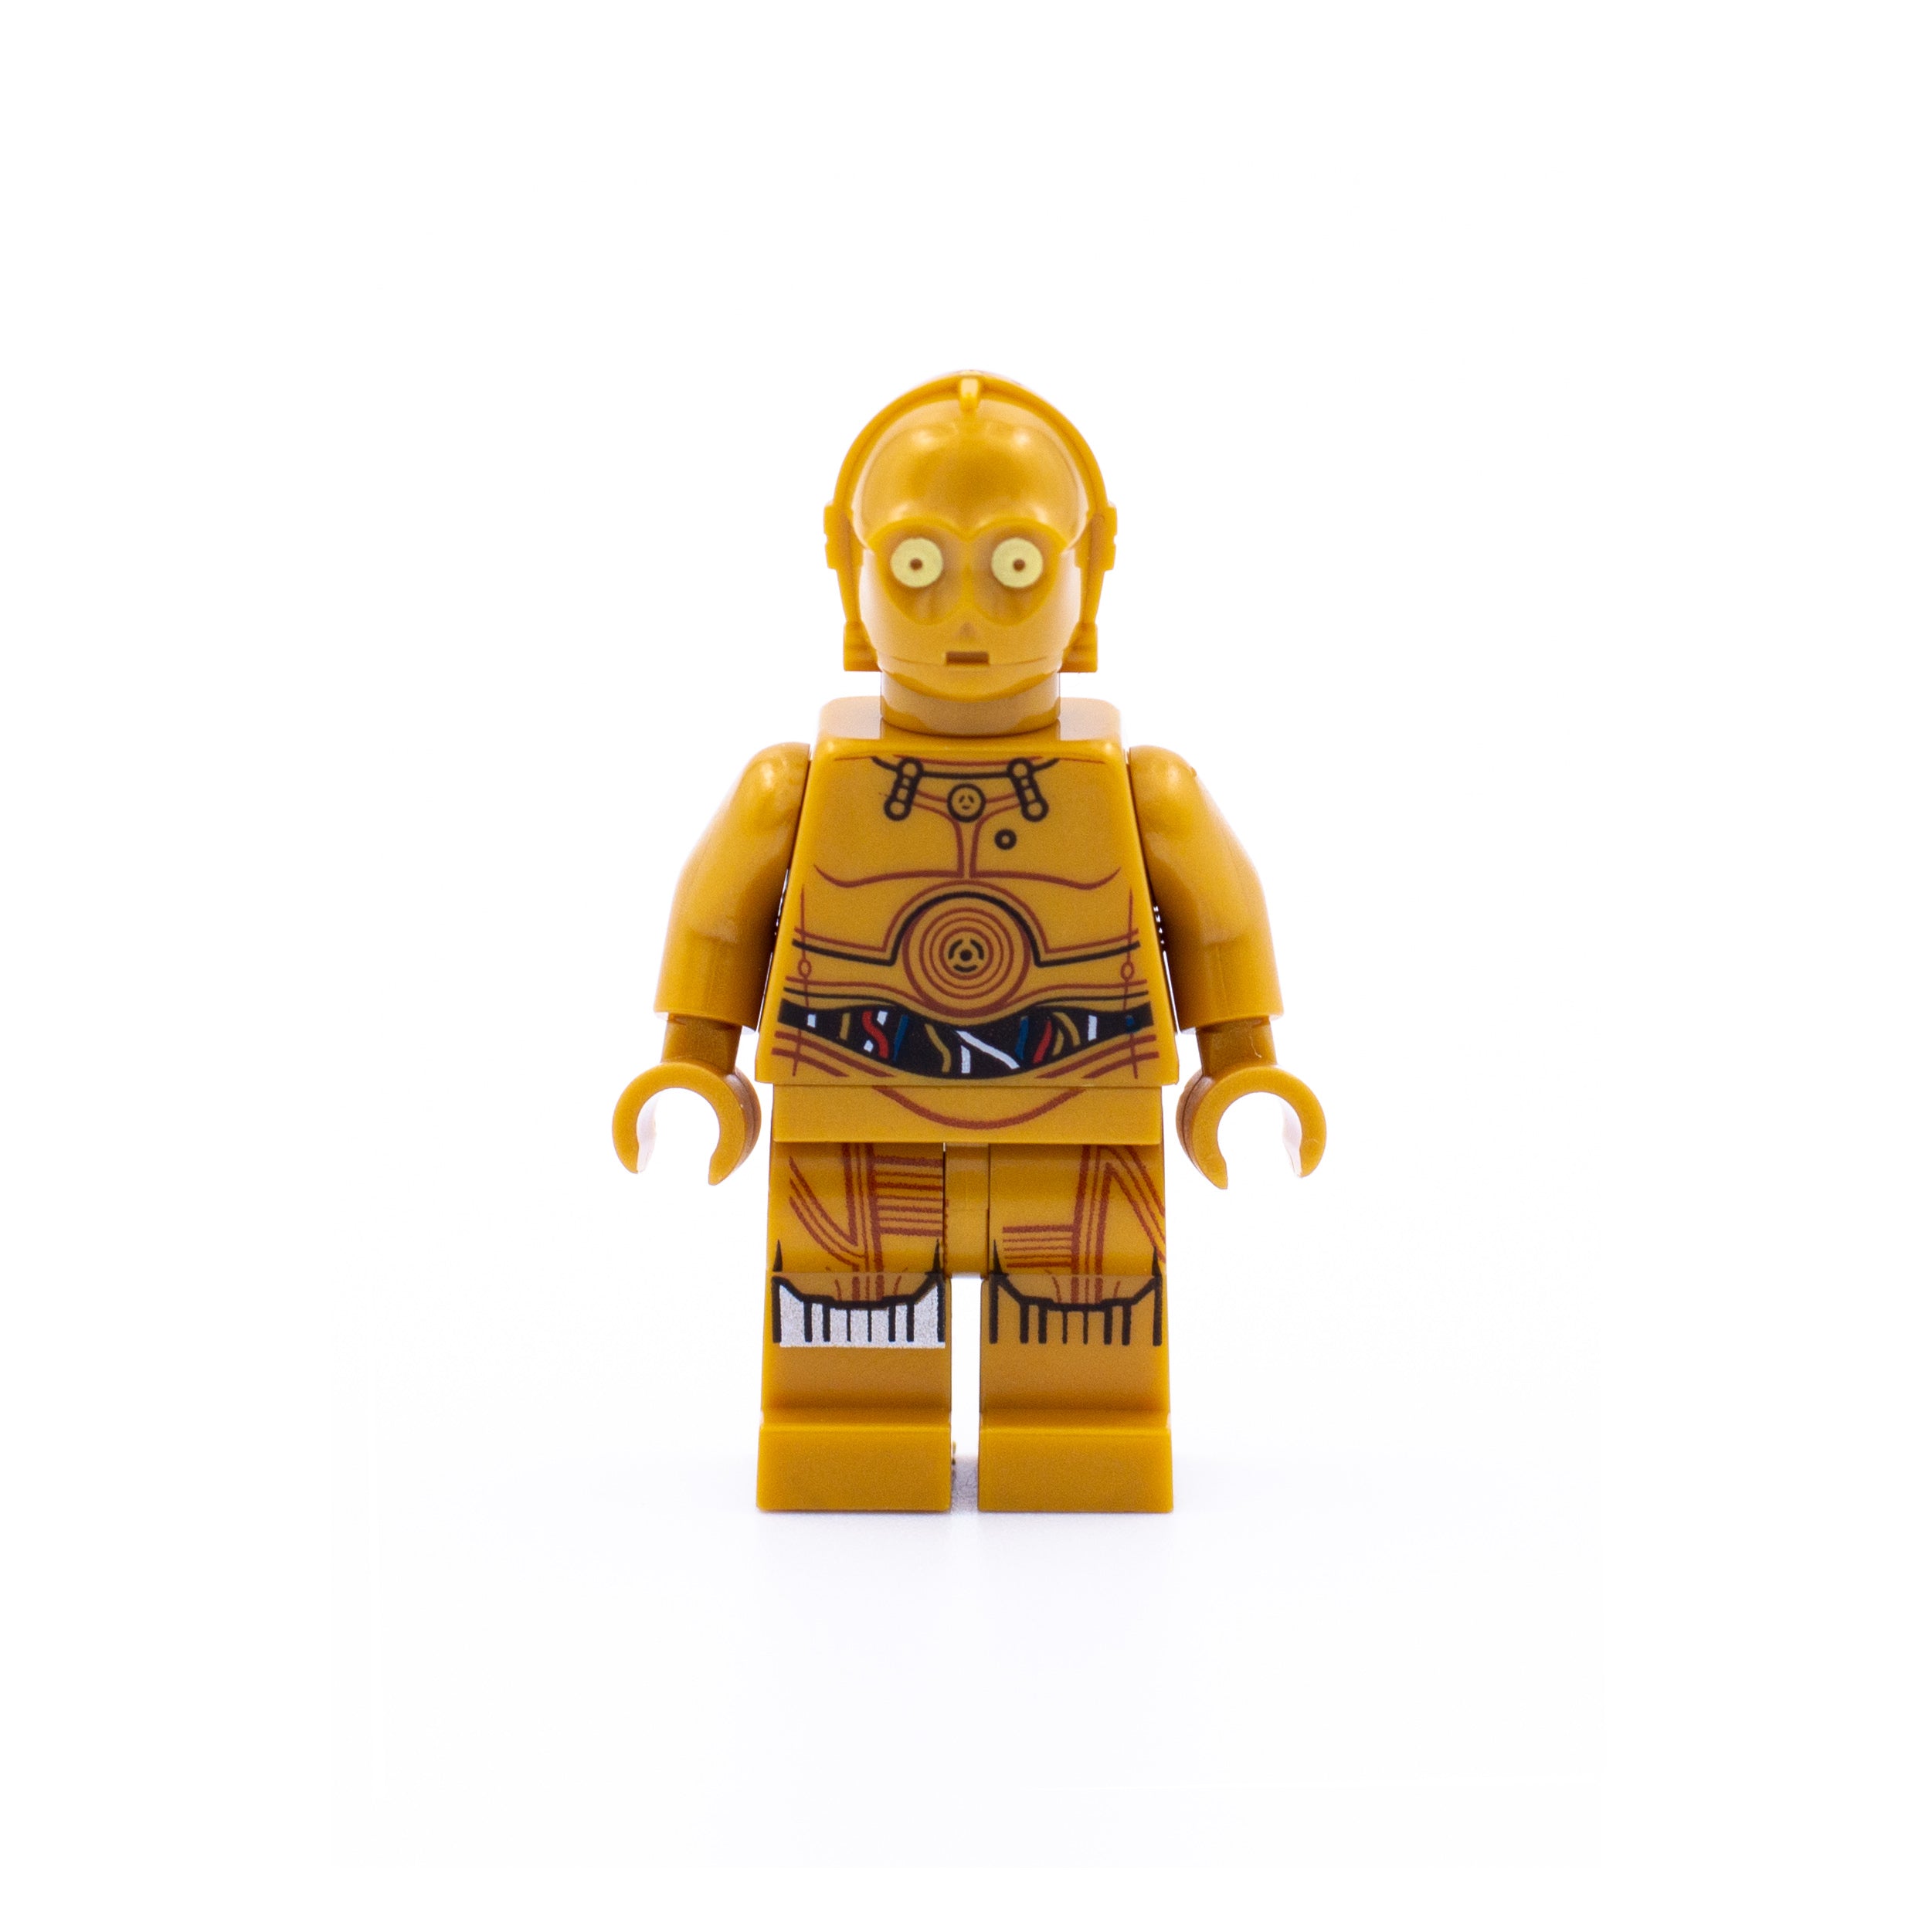 LEGO Star Wars Minifigure - C-3PO (Printed Legs)